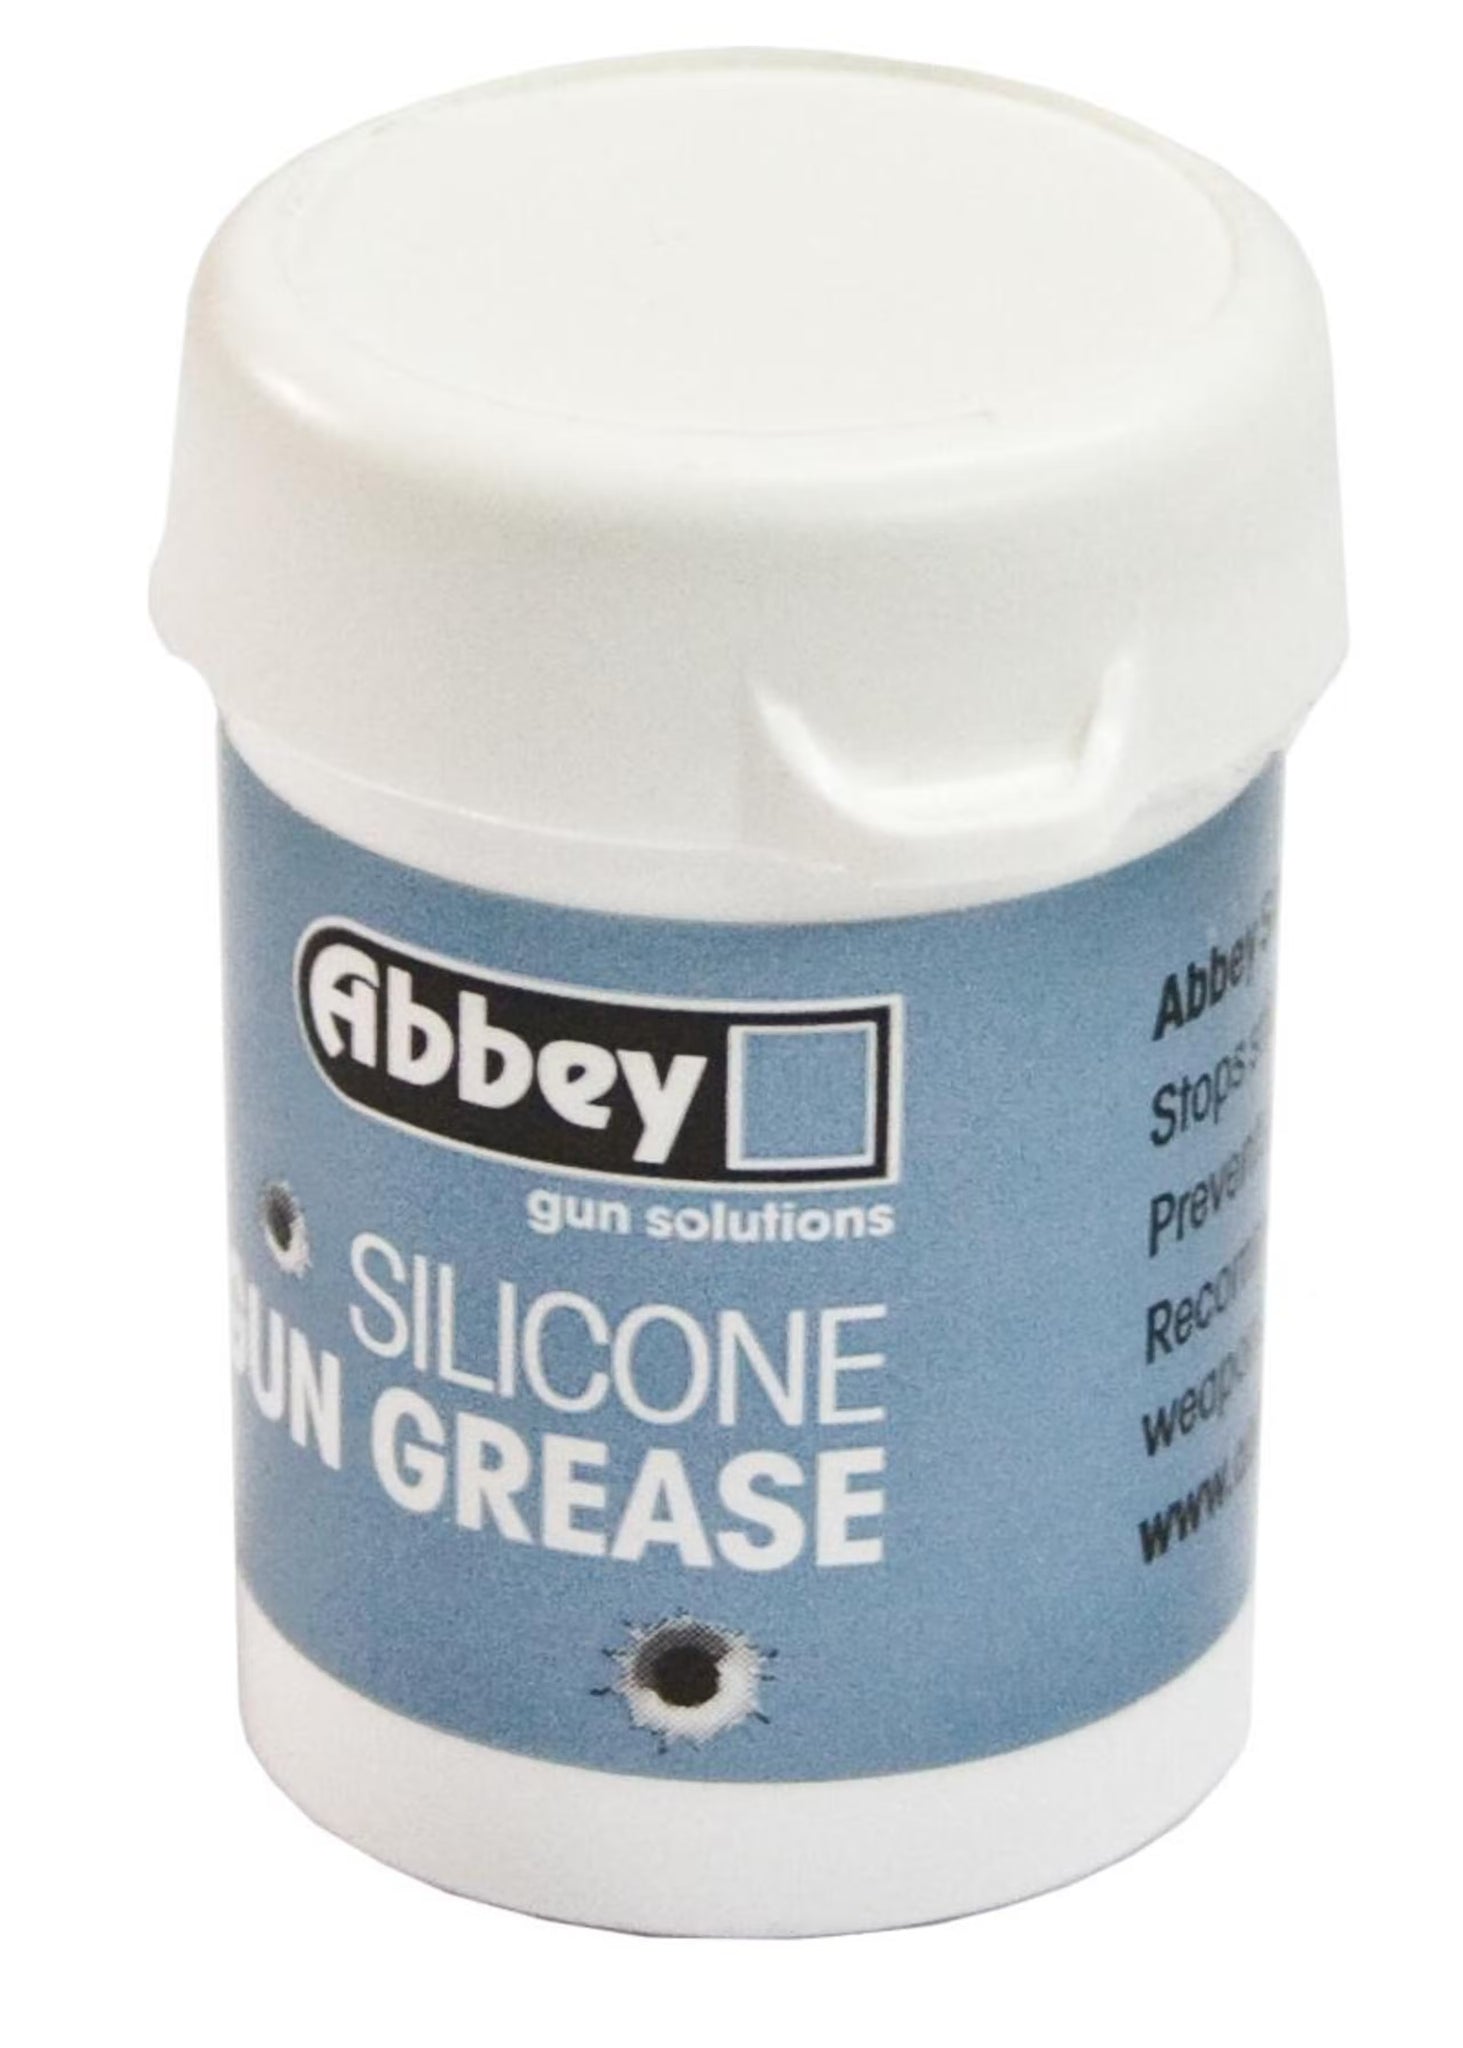 Abbey Silicone Gun Grease 20ml Pot